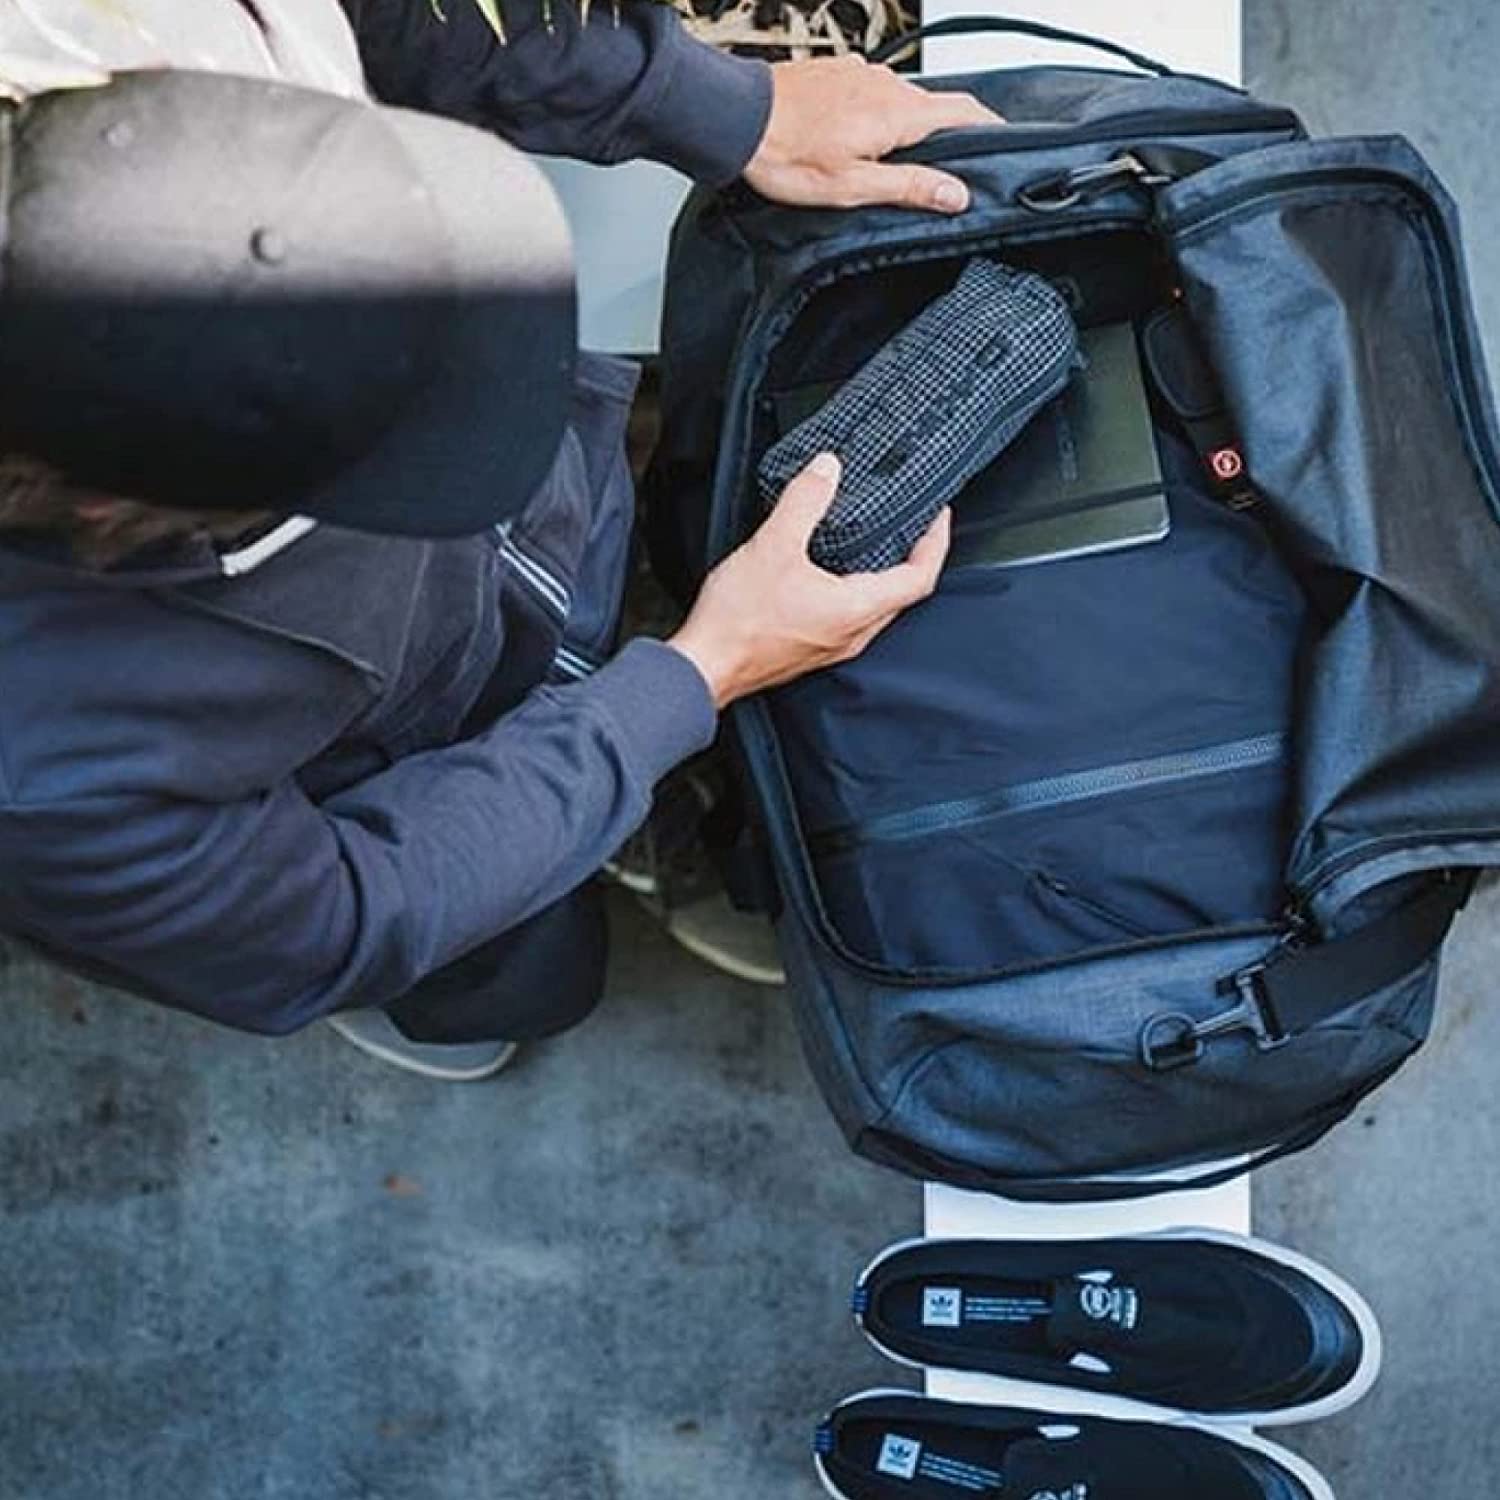 Dakine EQ Duffle 50 Travel Luggage Bag